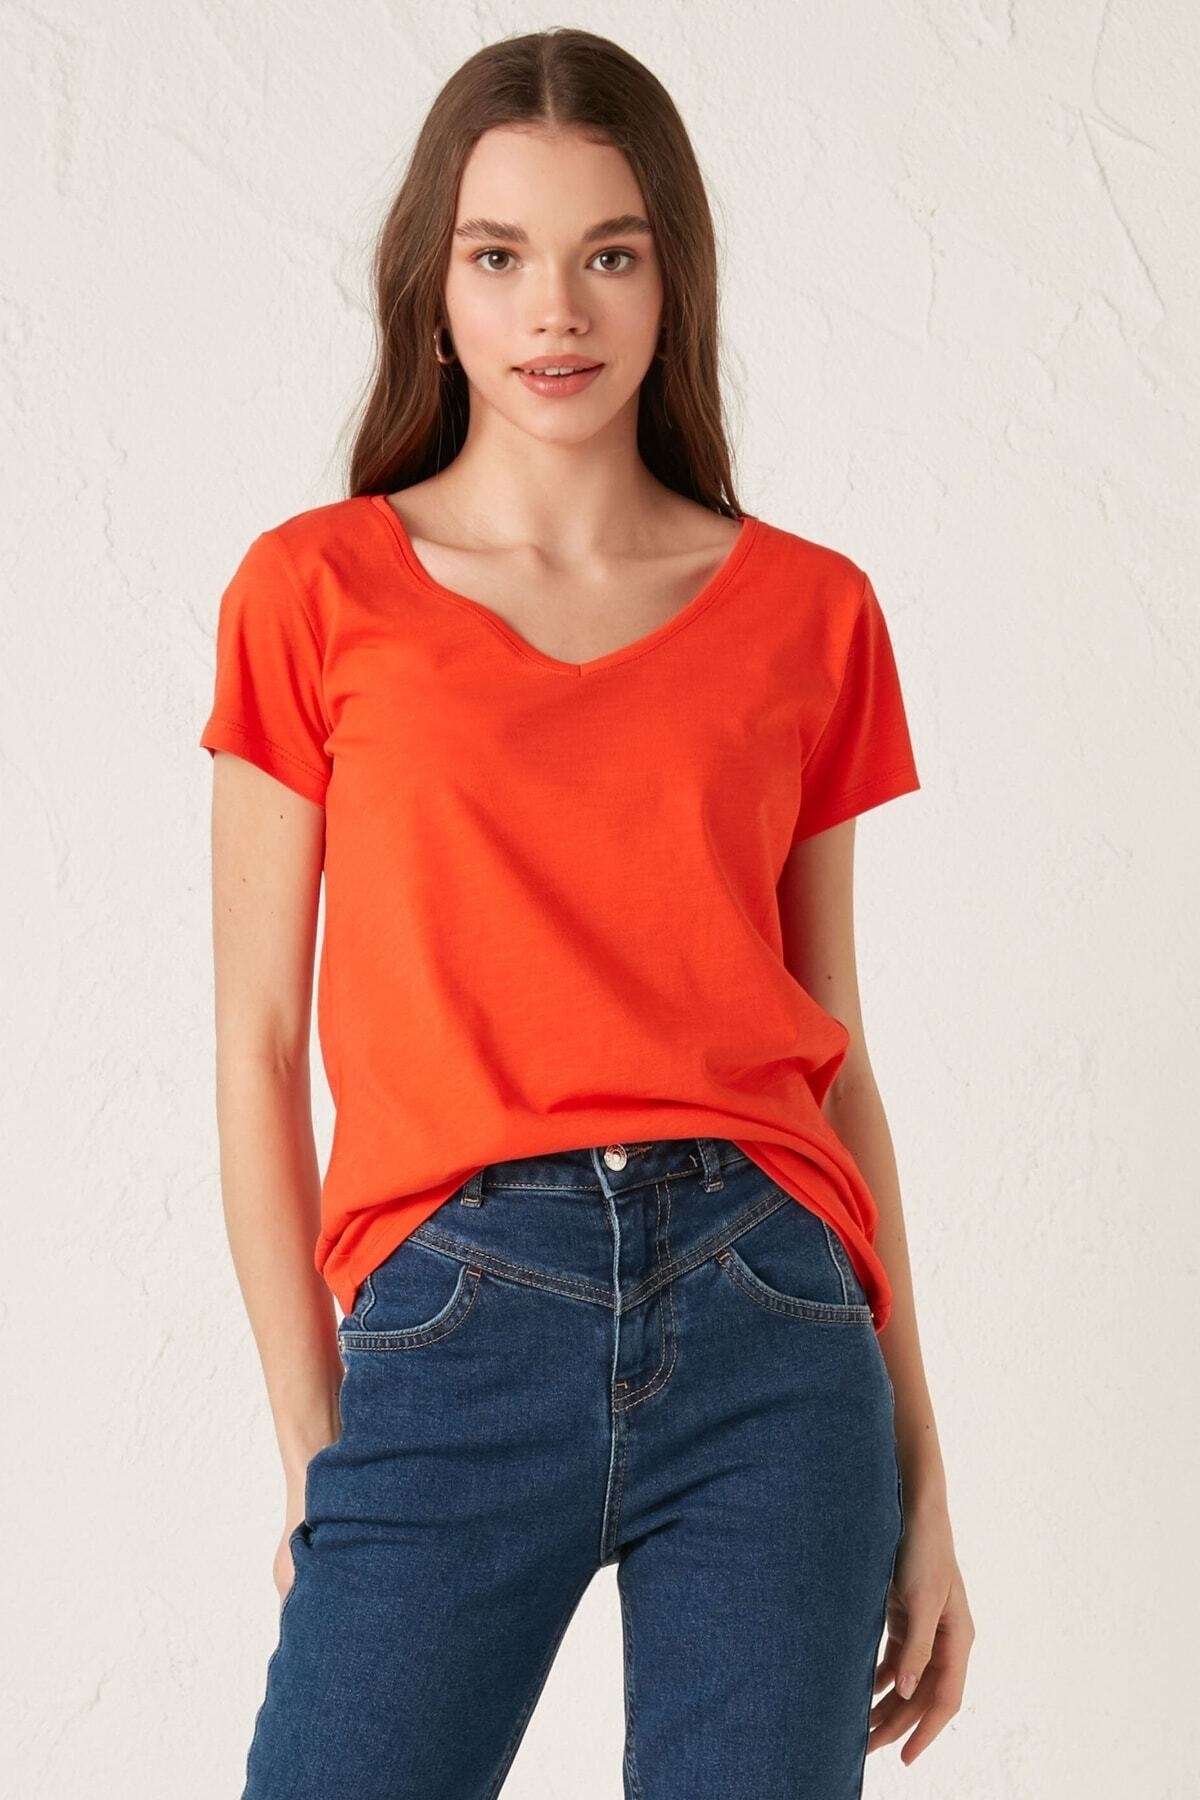 LC Waikiki Women's Orange T-Shirt V-Neck Straight Short Sleeve Basic From Your Fashion Style